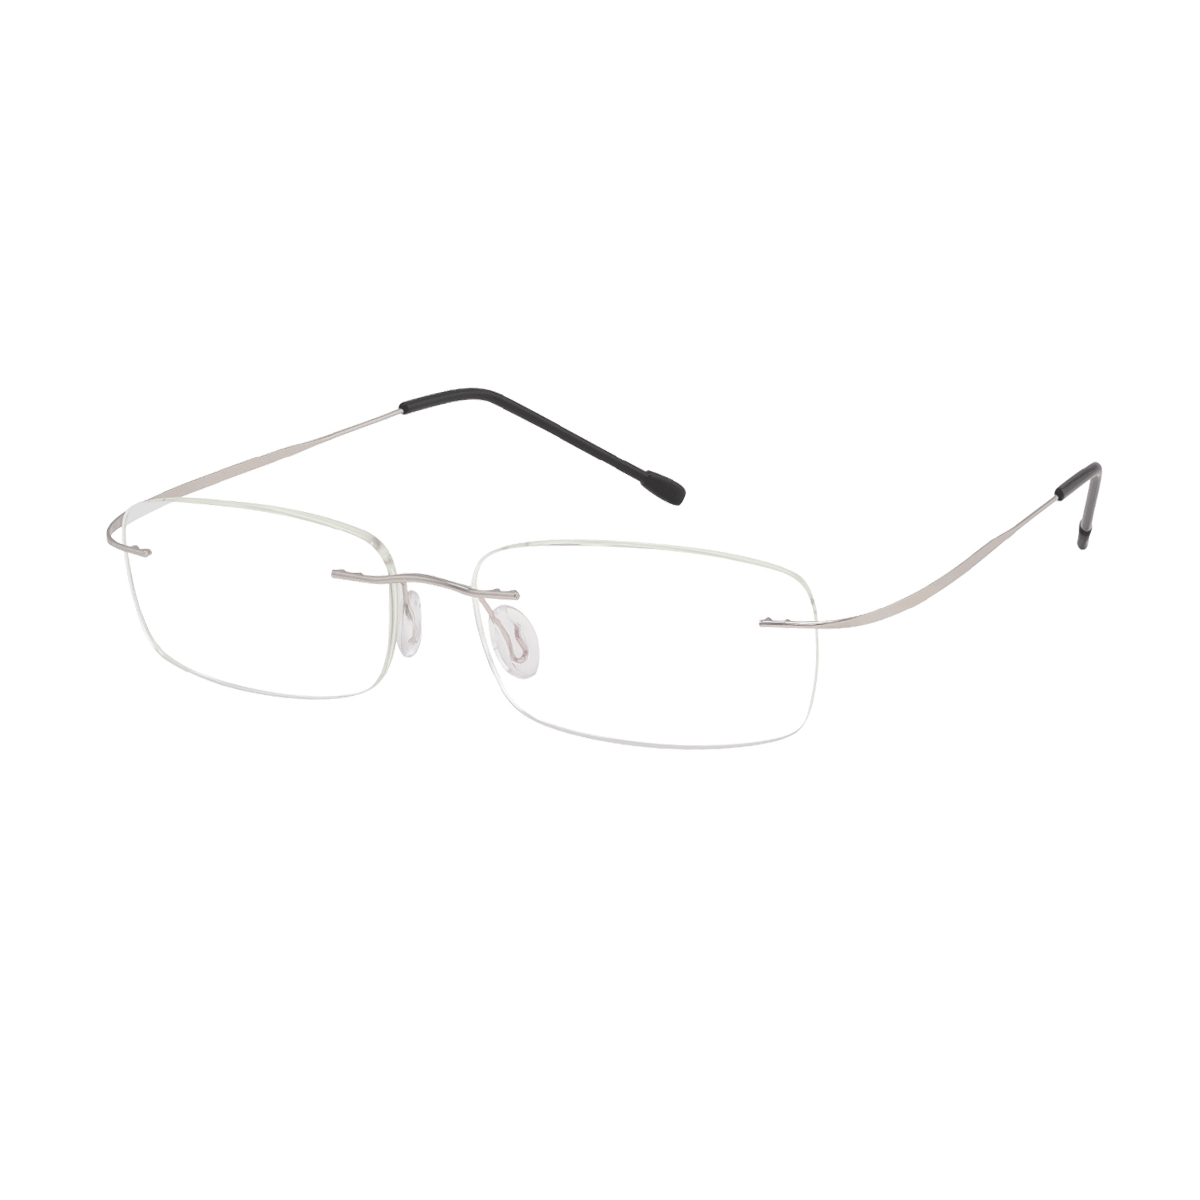 Morrow - Rectangle Silver Reading Glasses for Men